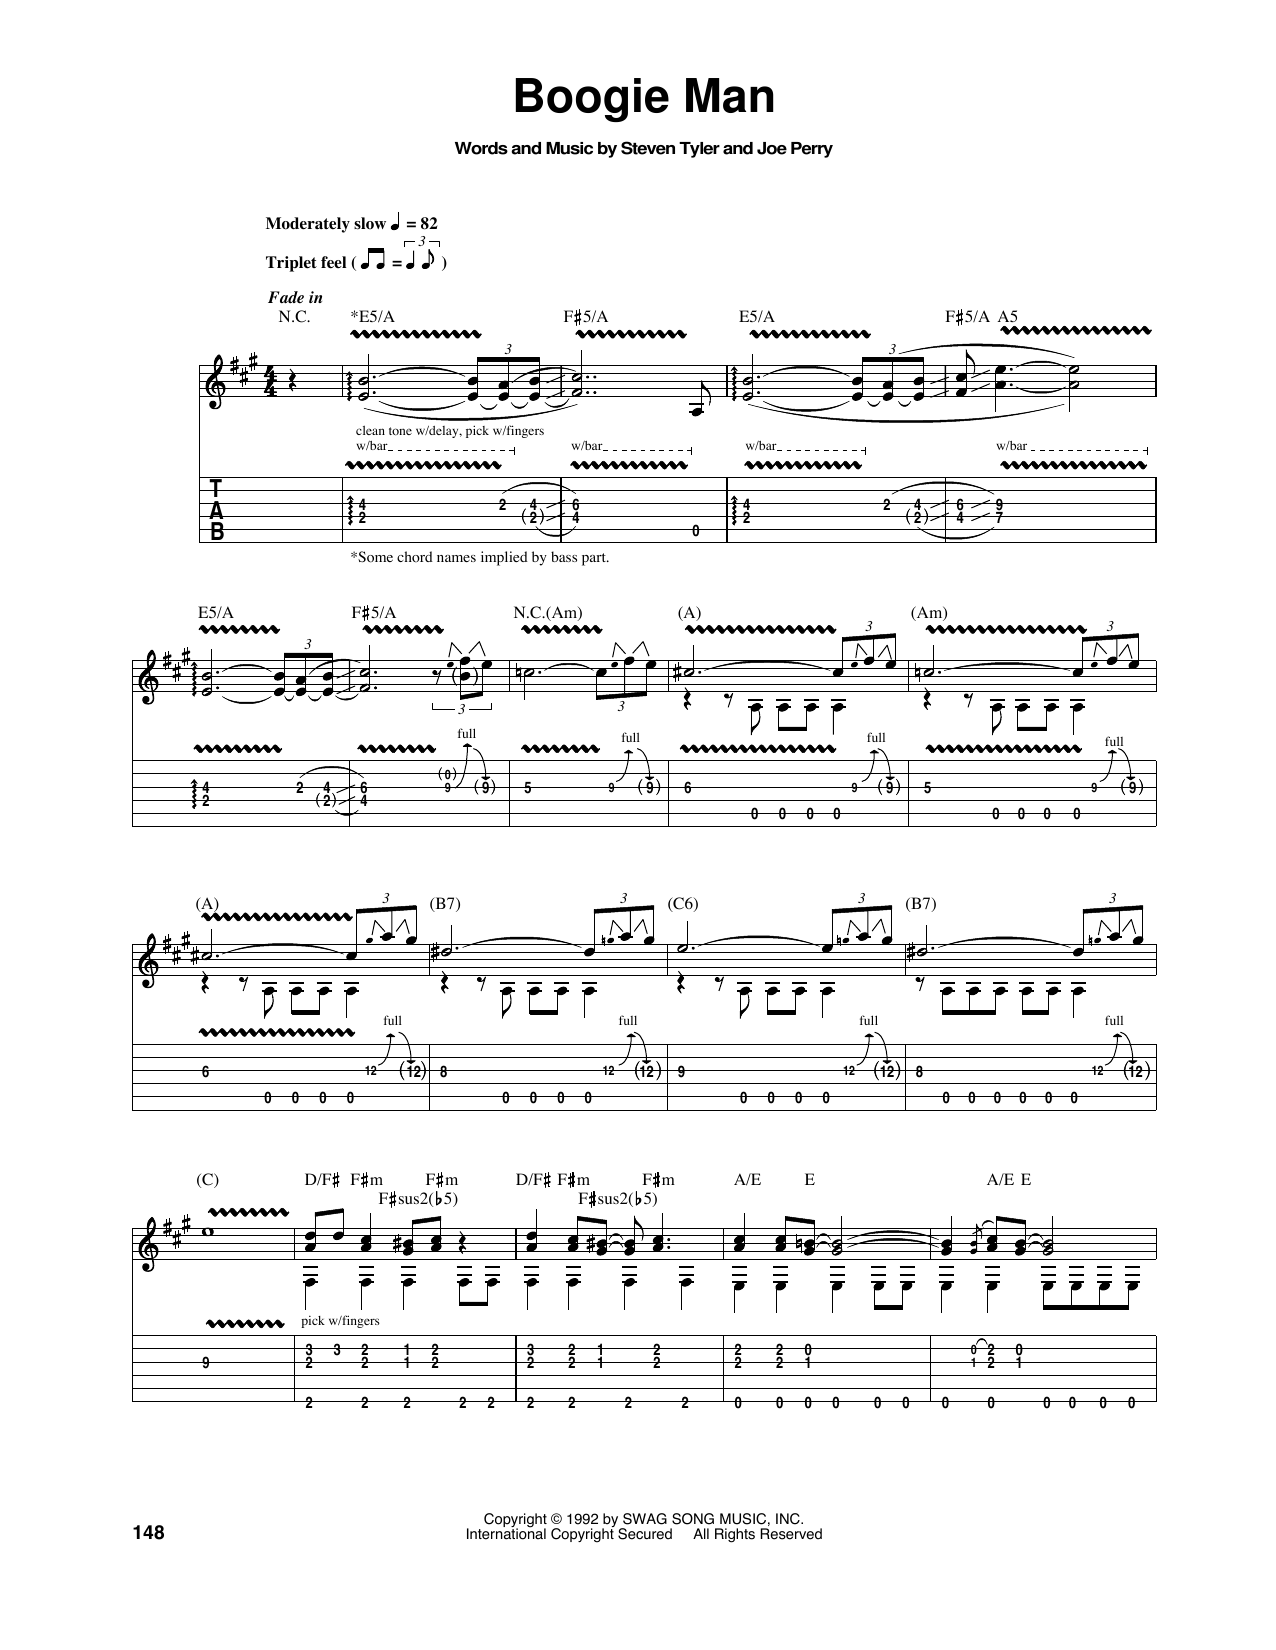 Aerosmith Boogie Man Sheet Music Notes & Chords for Guitar Tab - Download or Print PDF